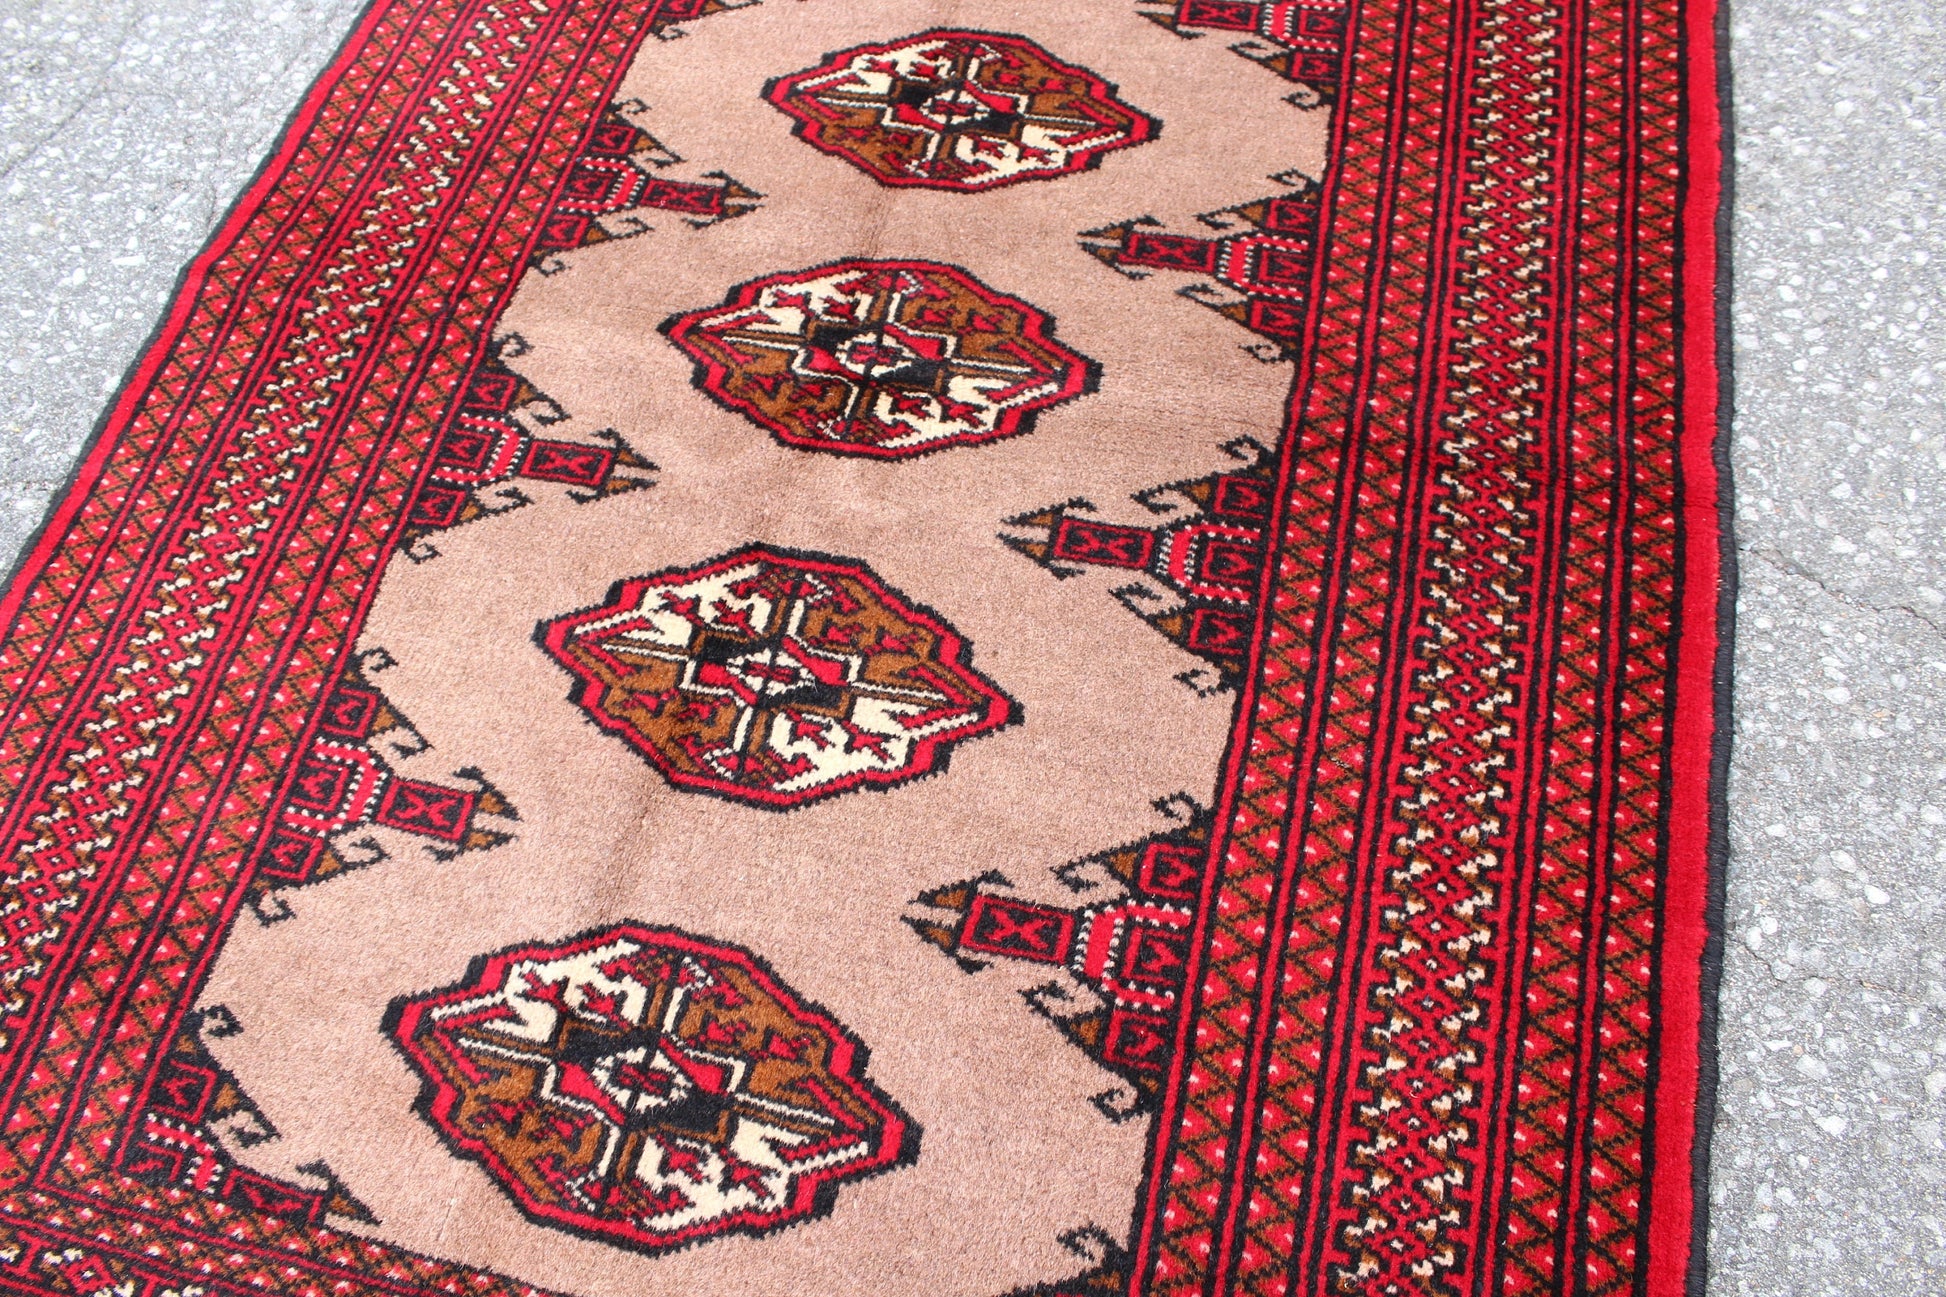 Red Peach 3x4 Vintage Tribal Oriental Persian Handmade Rug